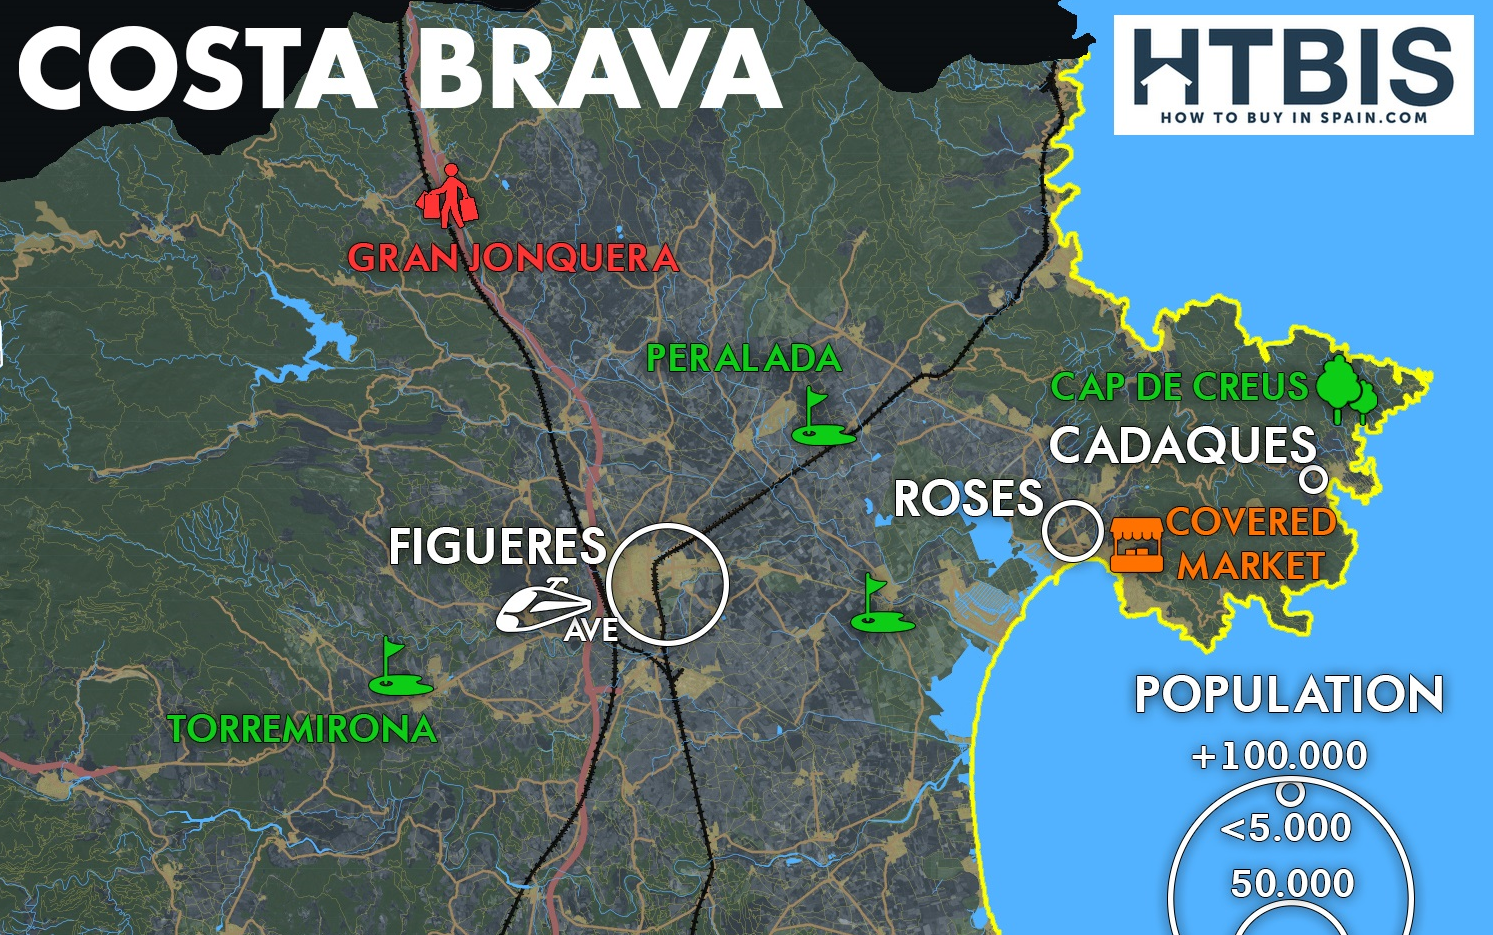 A map highlighting the location of Costa Brava near Girona.